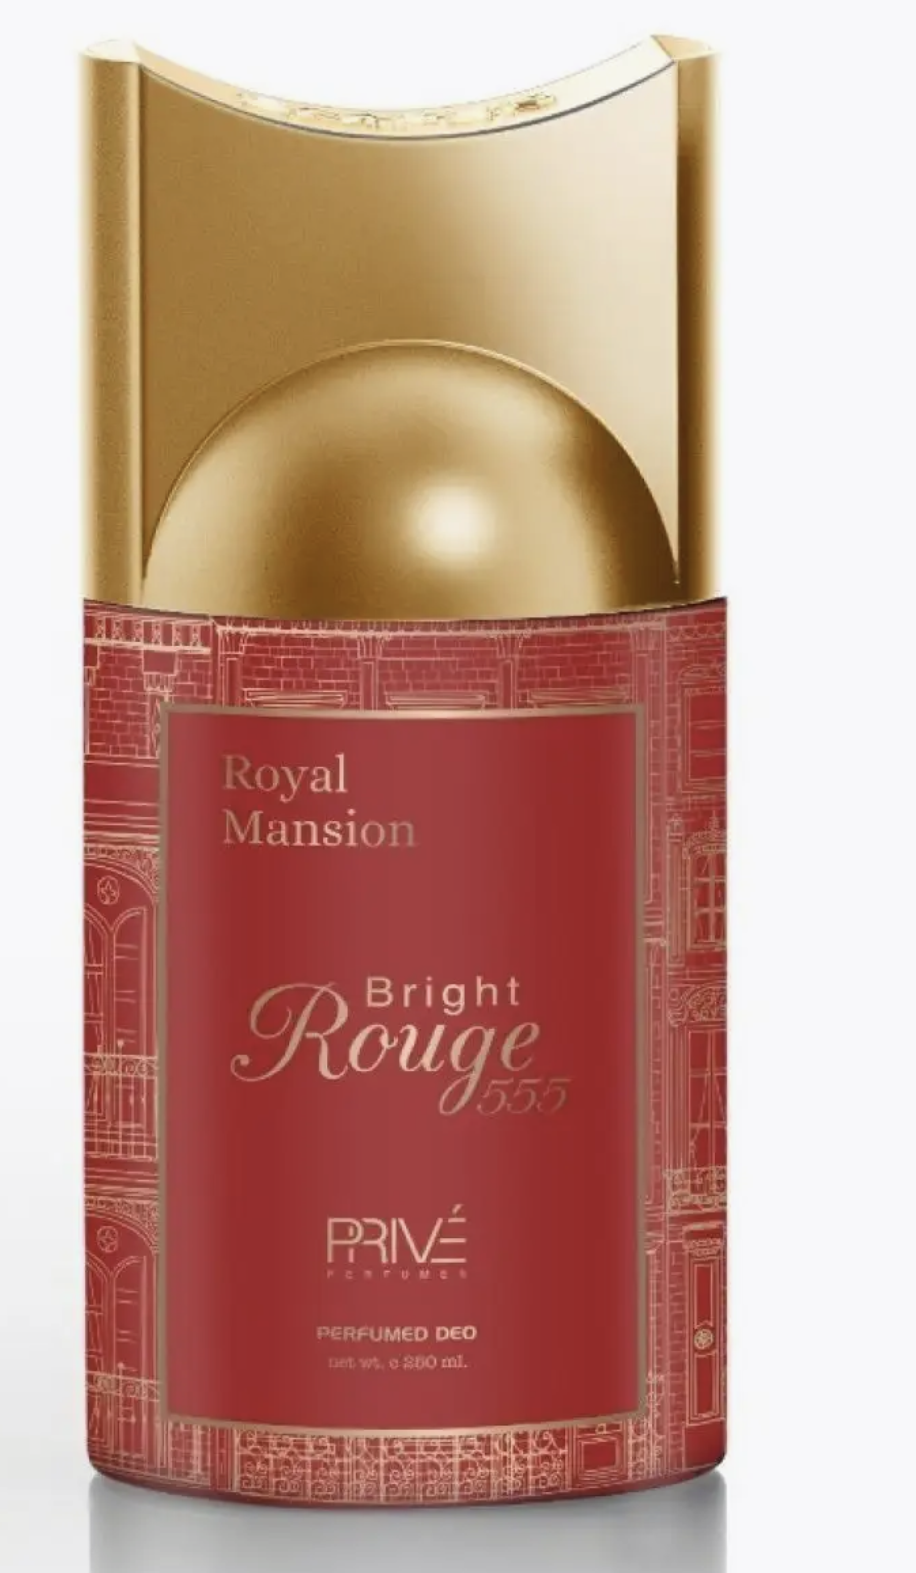   / Prive Perfumes - -    Bright Rouge 555 Royal Mansion 250 